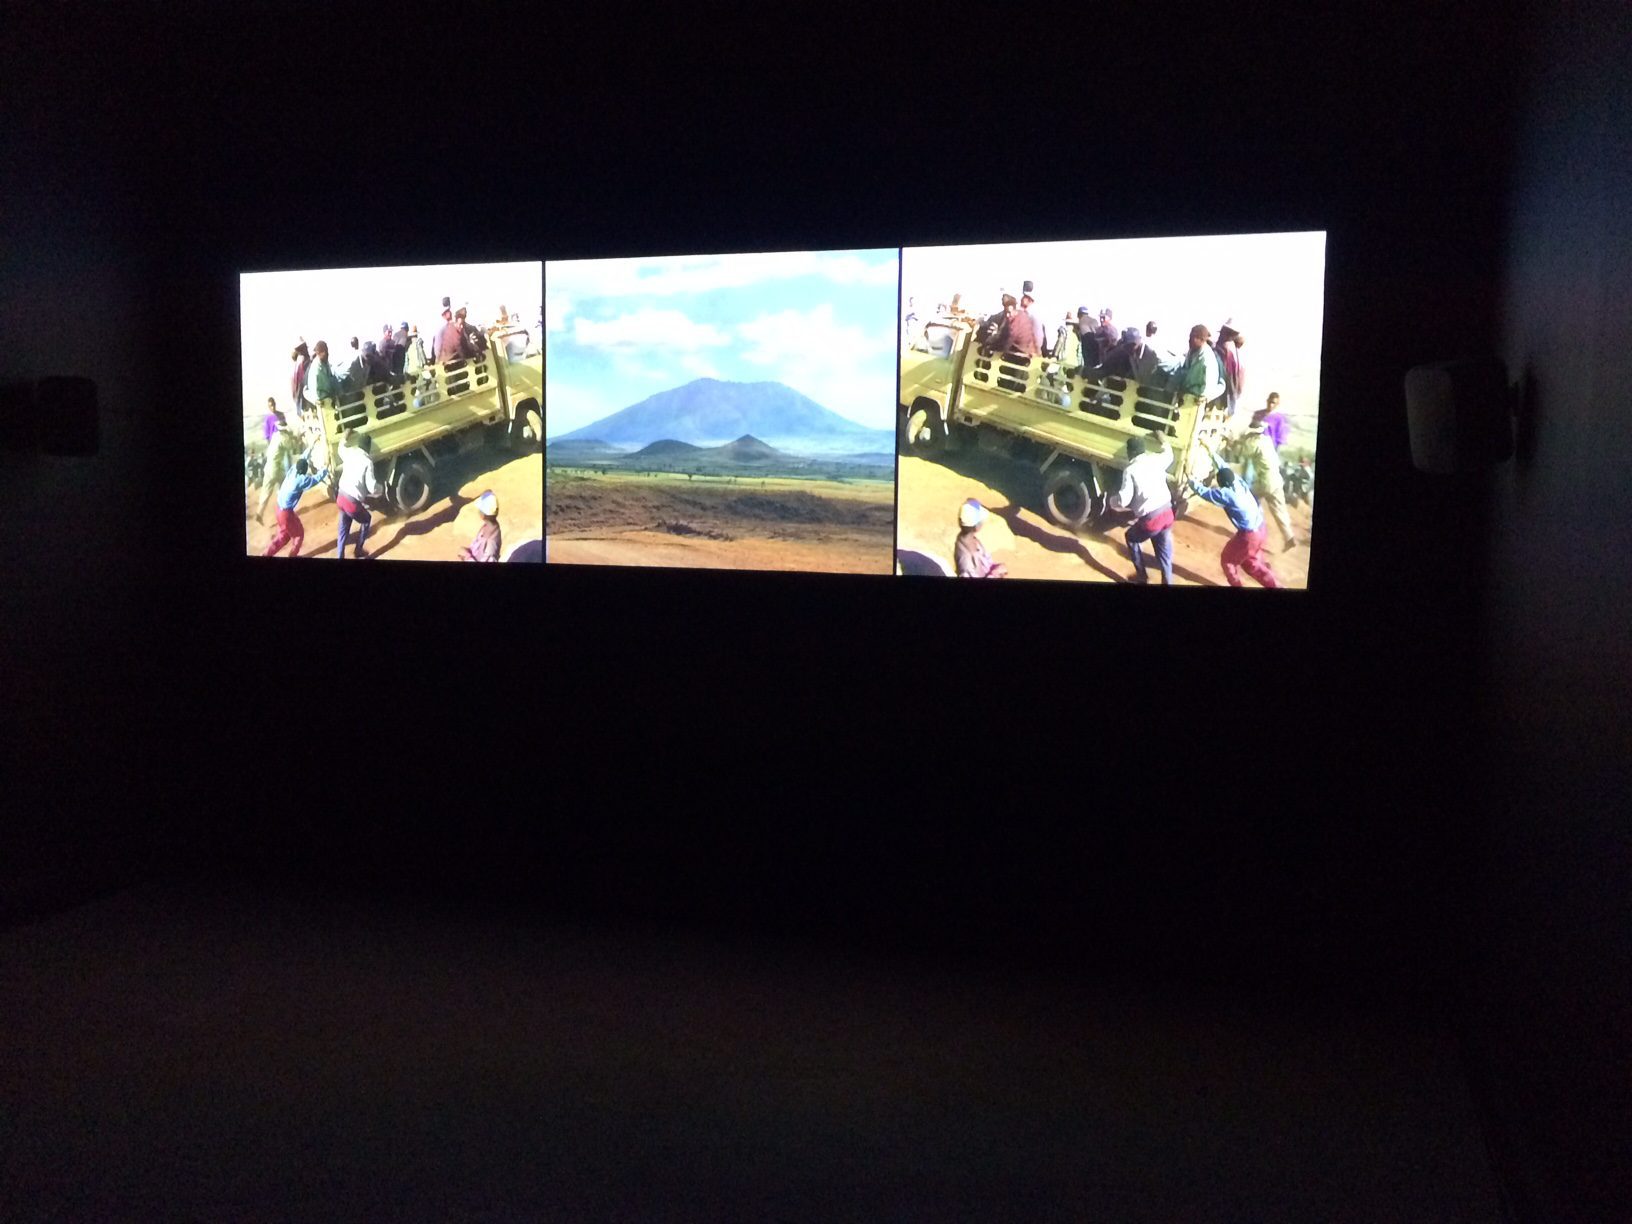 Theo Eshetu Trip to Mount Zuqualla, 2015 Video installation, 7 min, loop